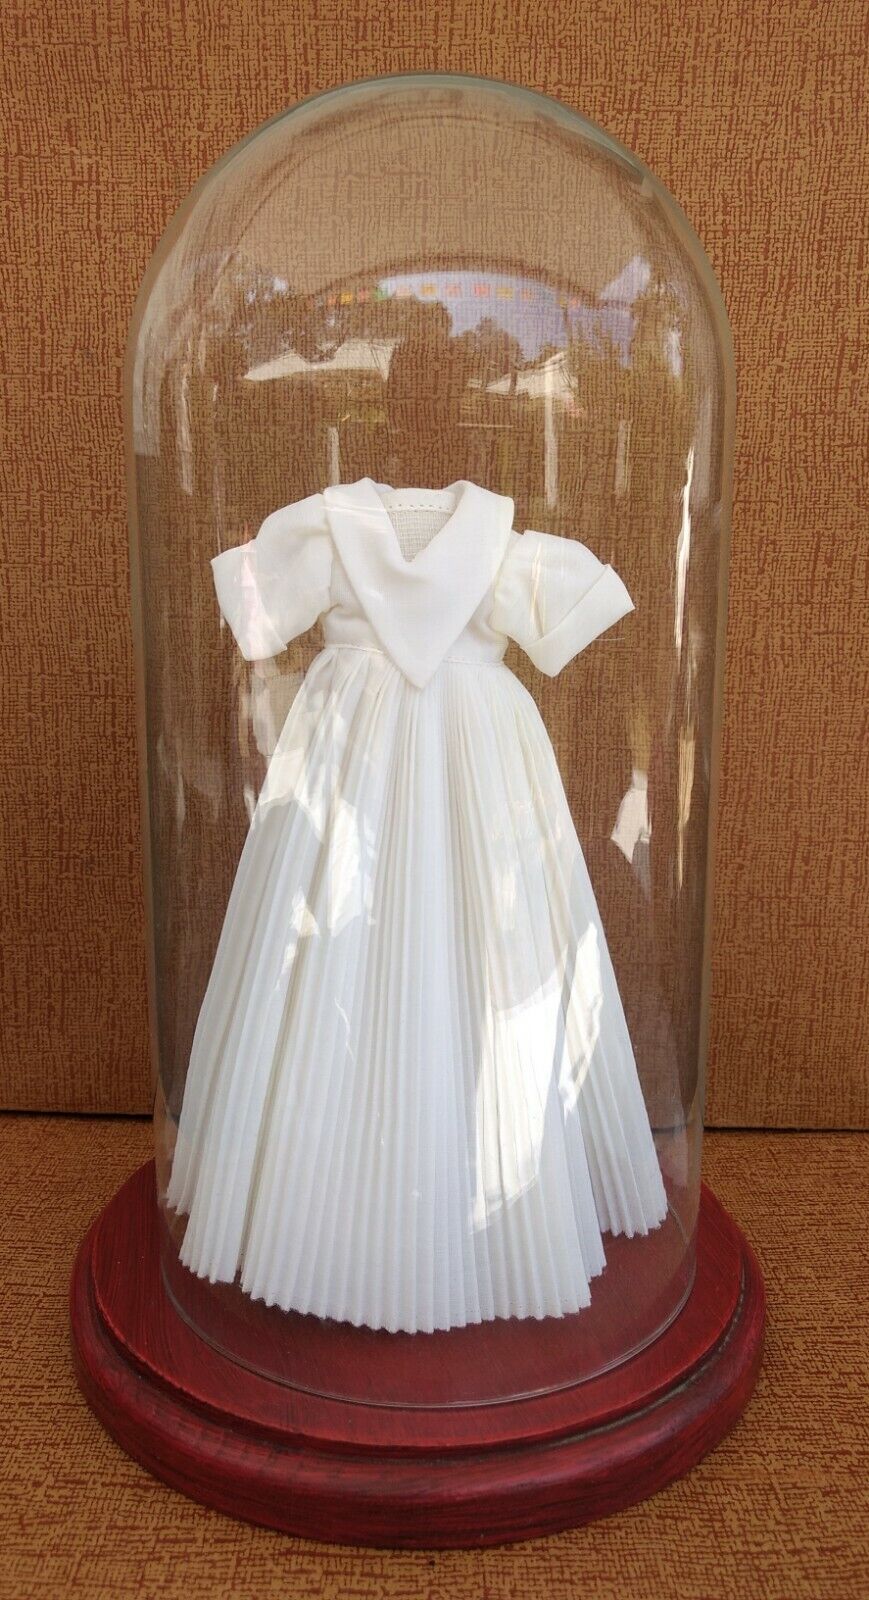 Domed Glass Display Case for Clock, Taxidermy or Doll w Christening Gown 12"x 7" Без бренда - фотография #12